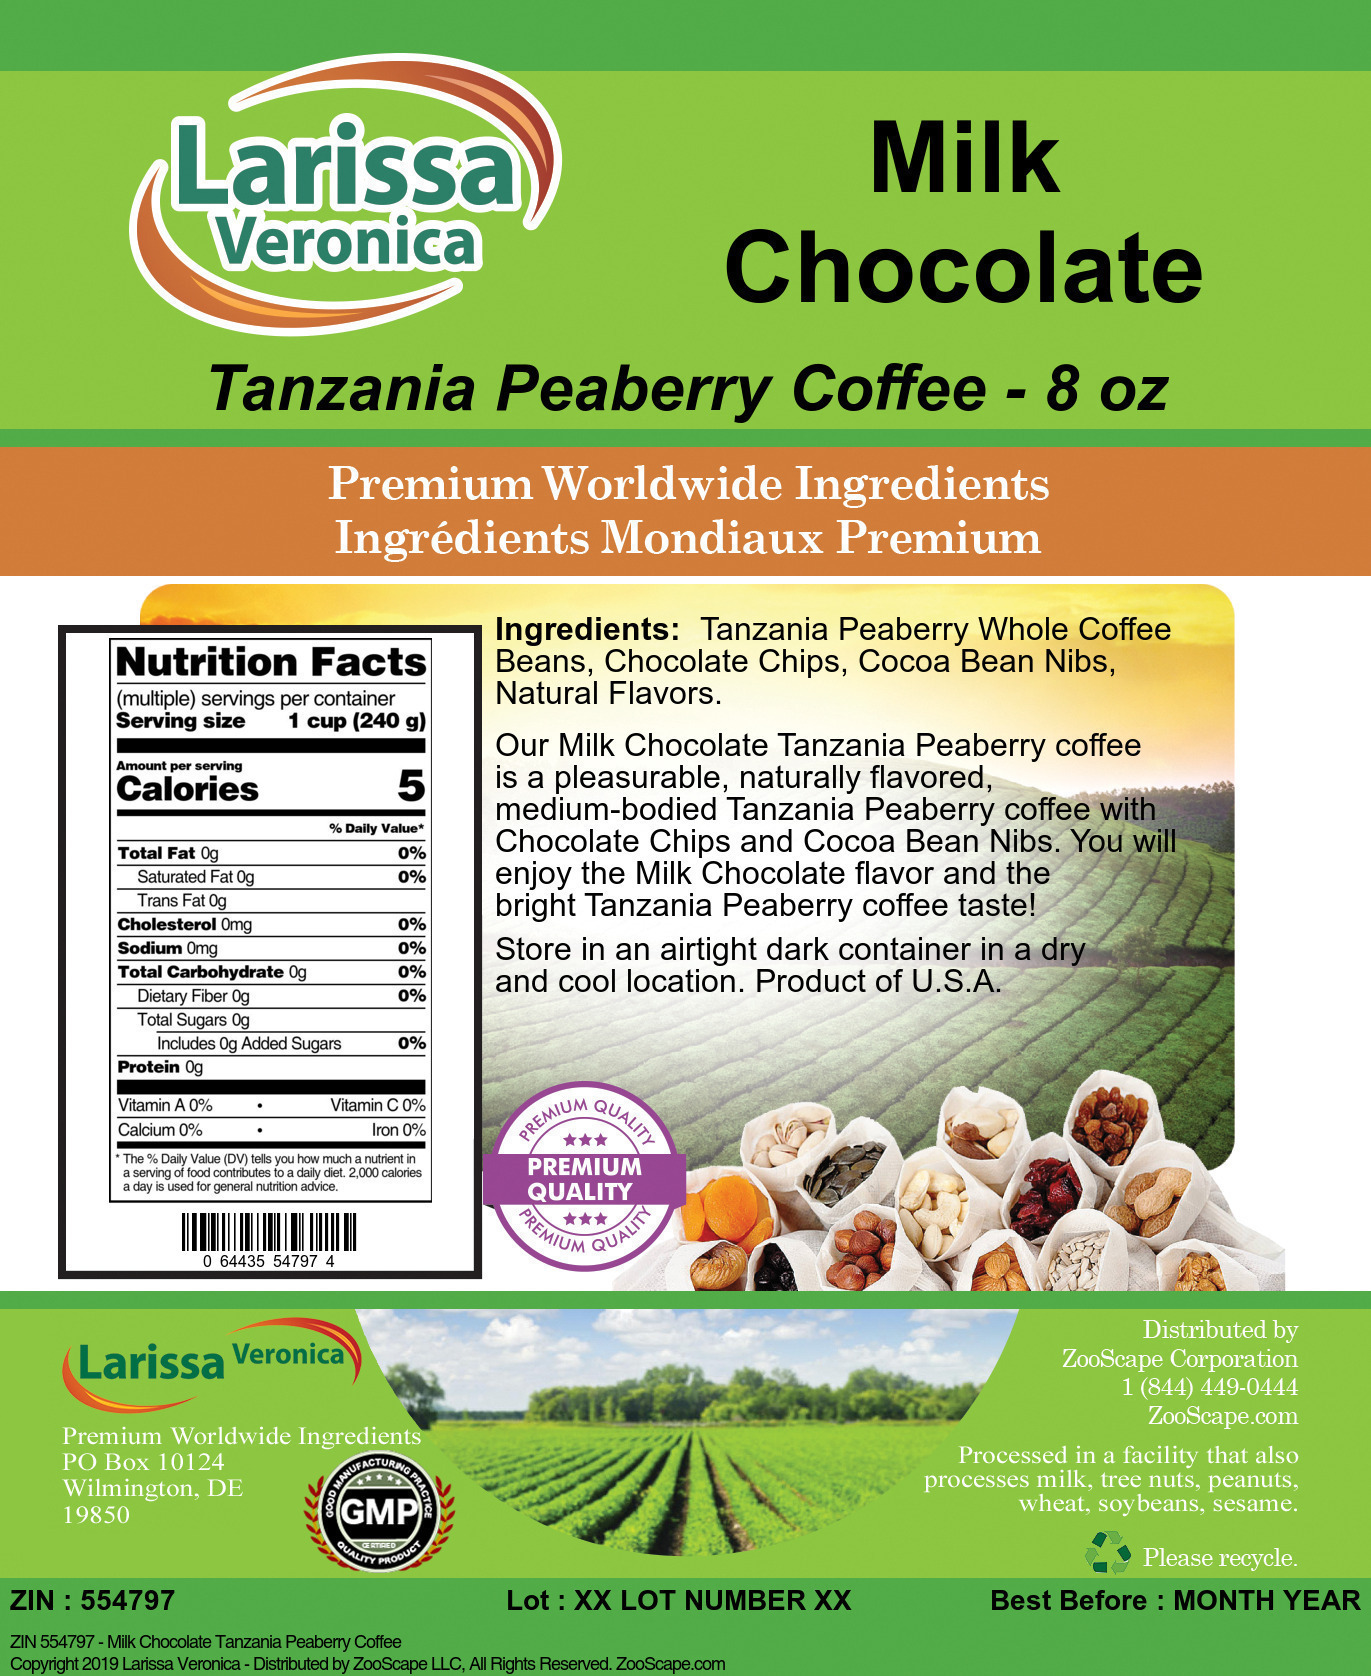 Milk Chocolate Tanzania Peaberry Coffee - Label